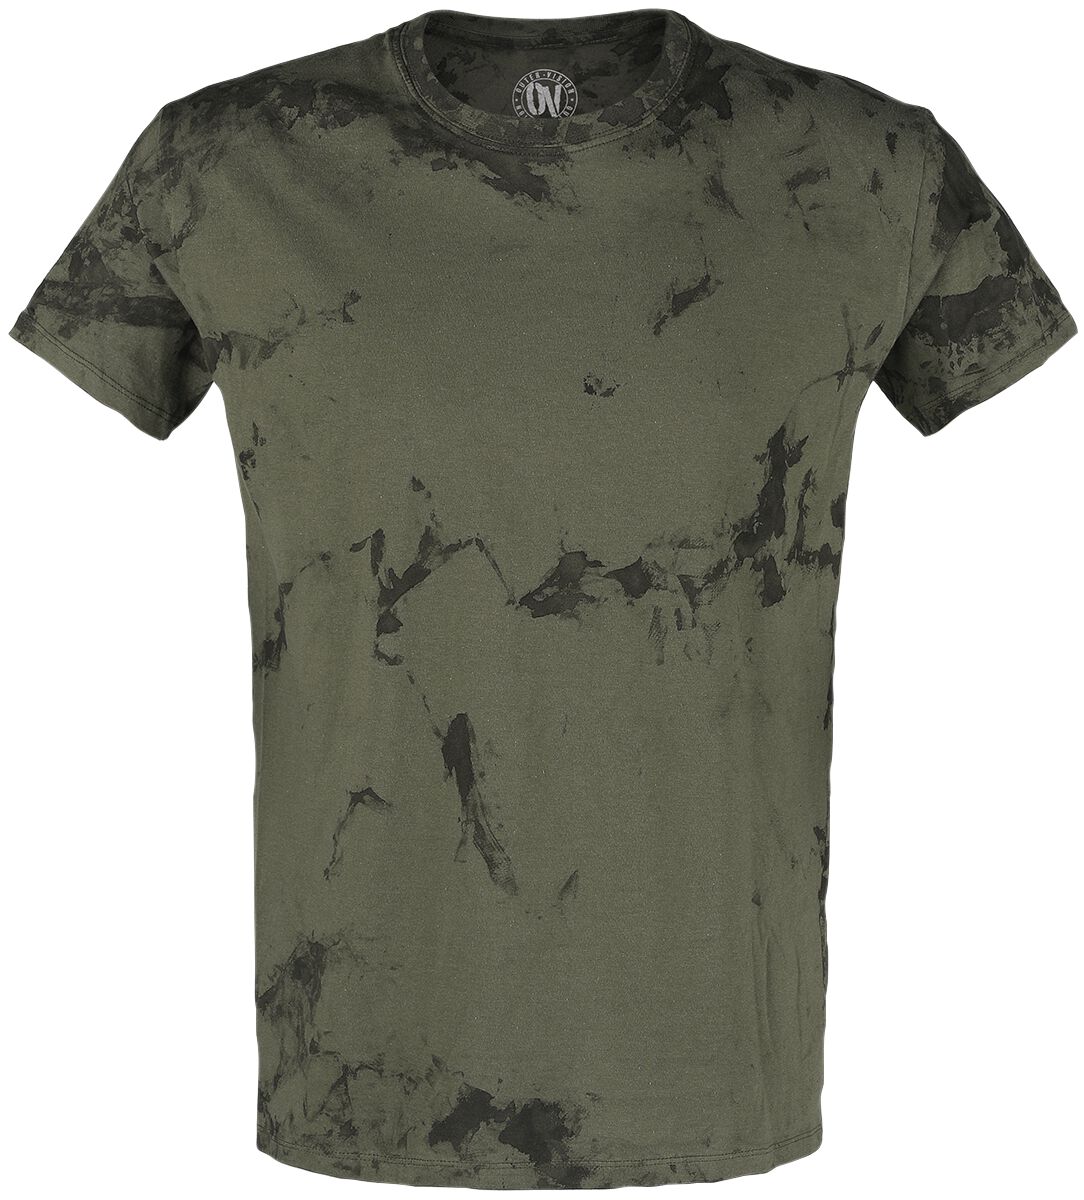 Outer Vision T-Shirt - Man`s T-Shirt - S bis XXL - für Männer - Größe XXL - khaki